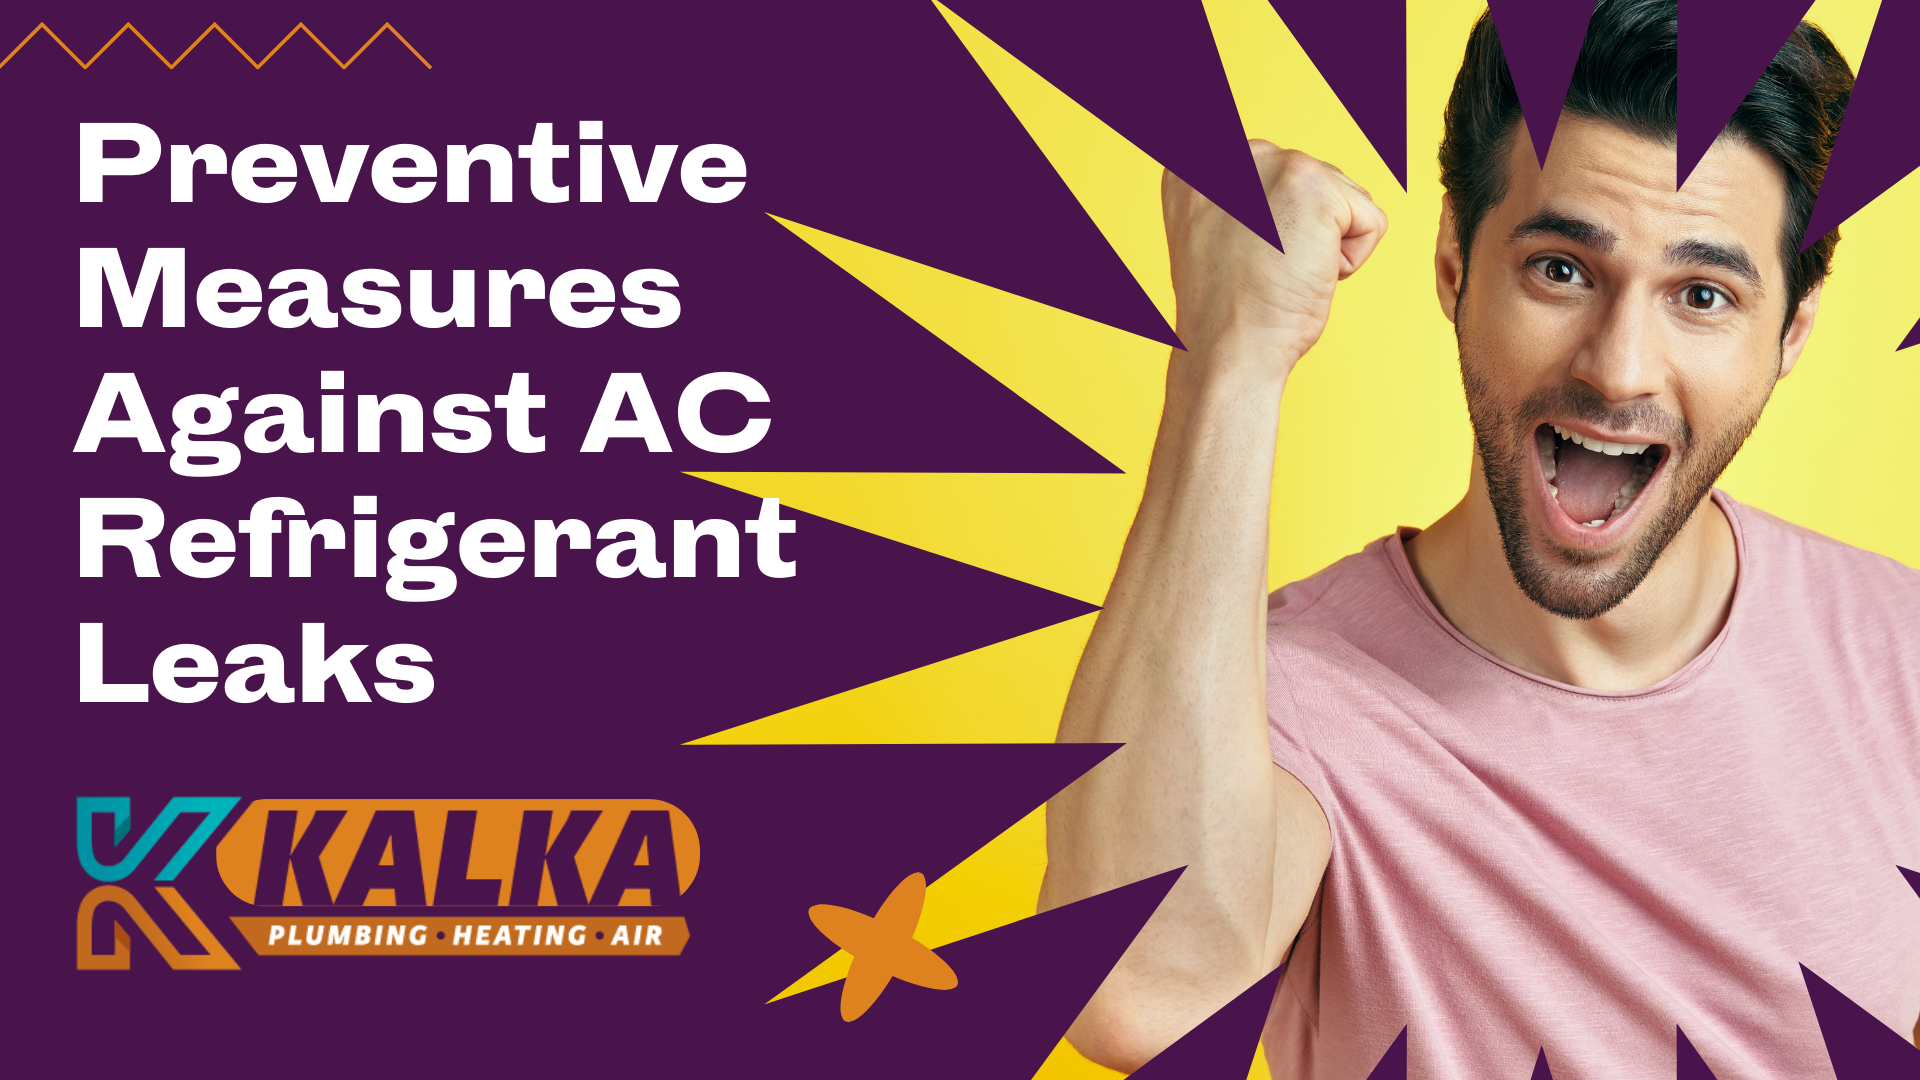 Preventive Measures Against Potential AC Refrigerant Leaks